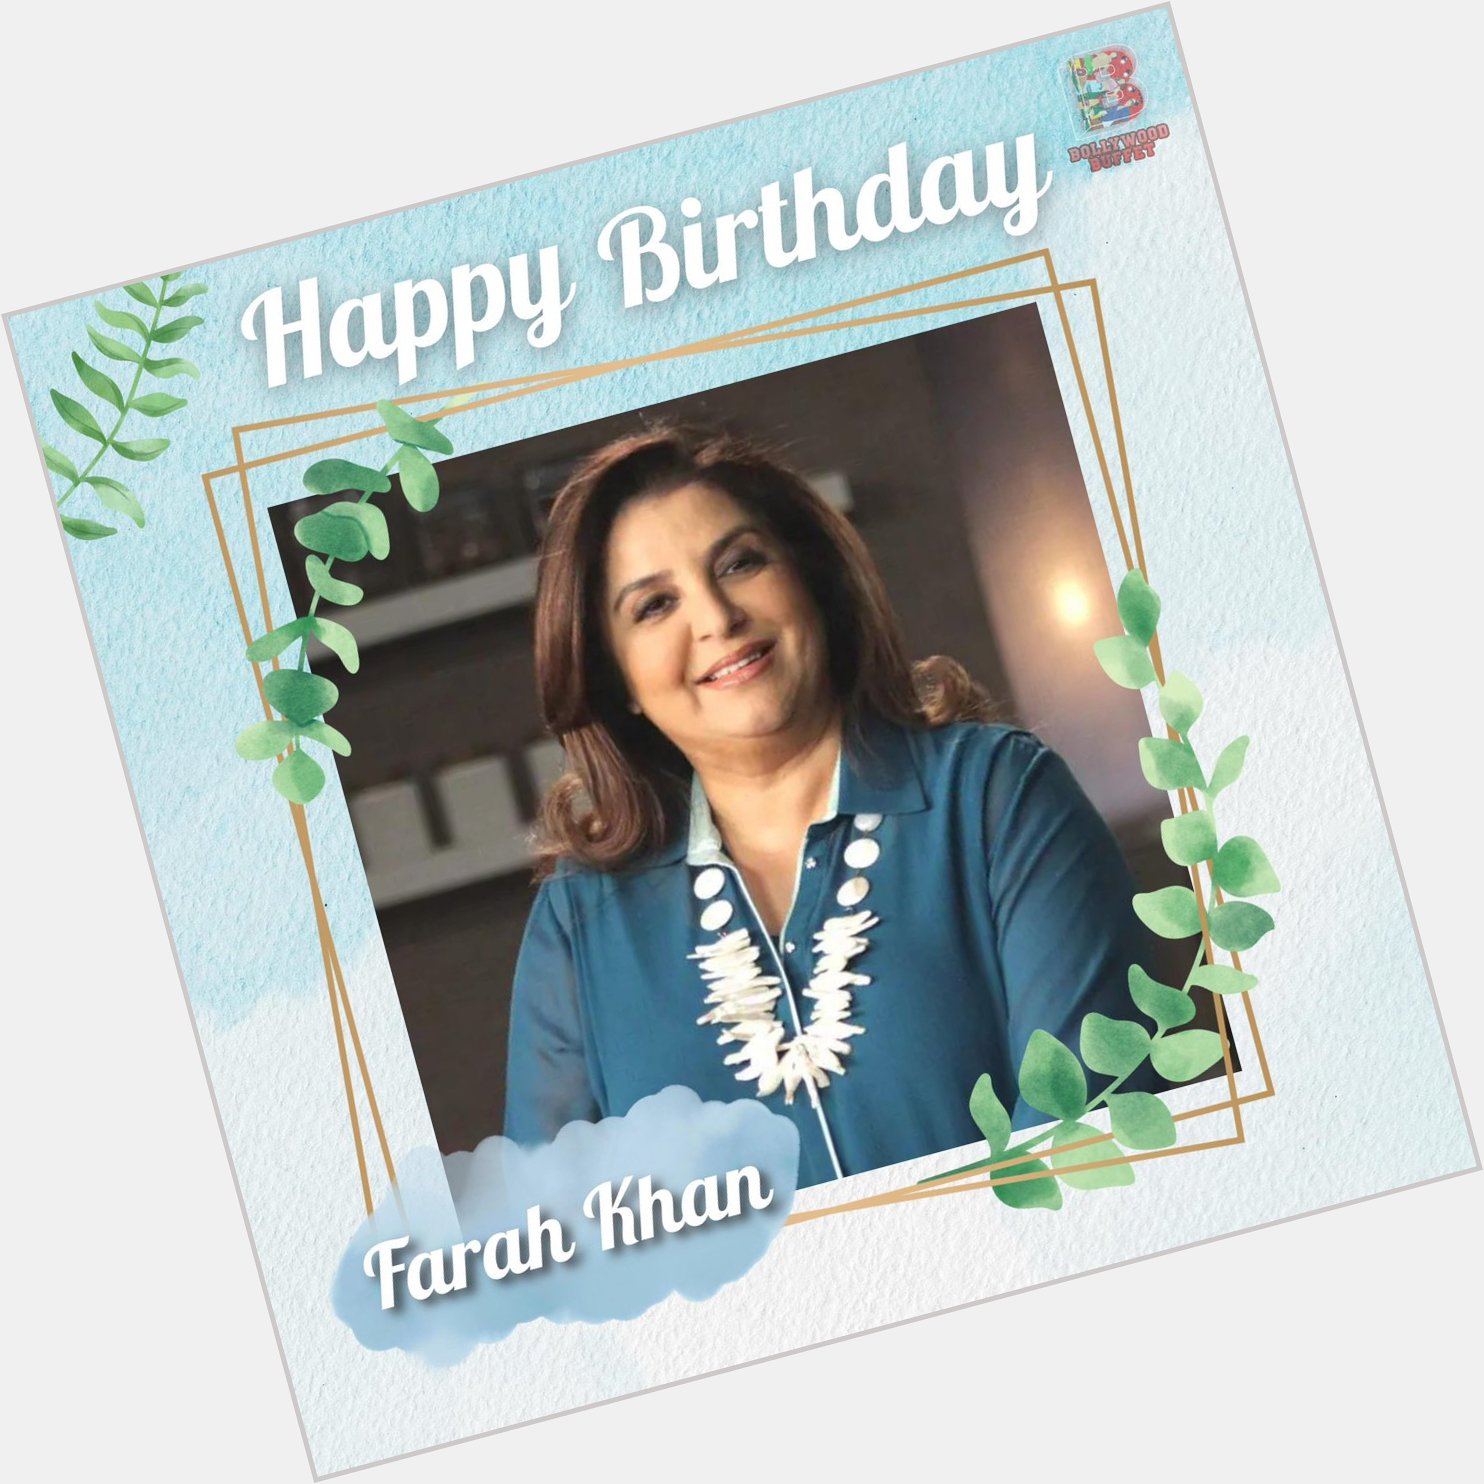 Happy birthday farah khan     